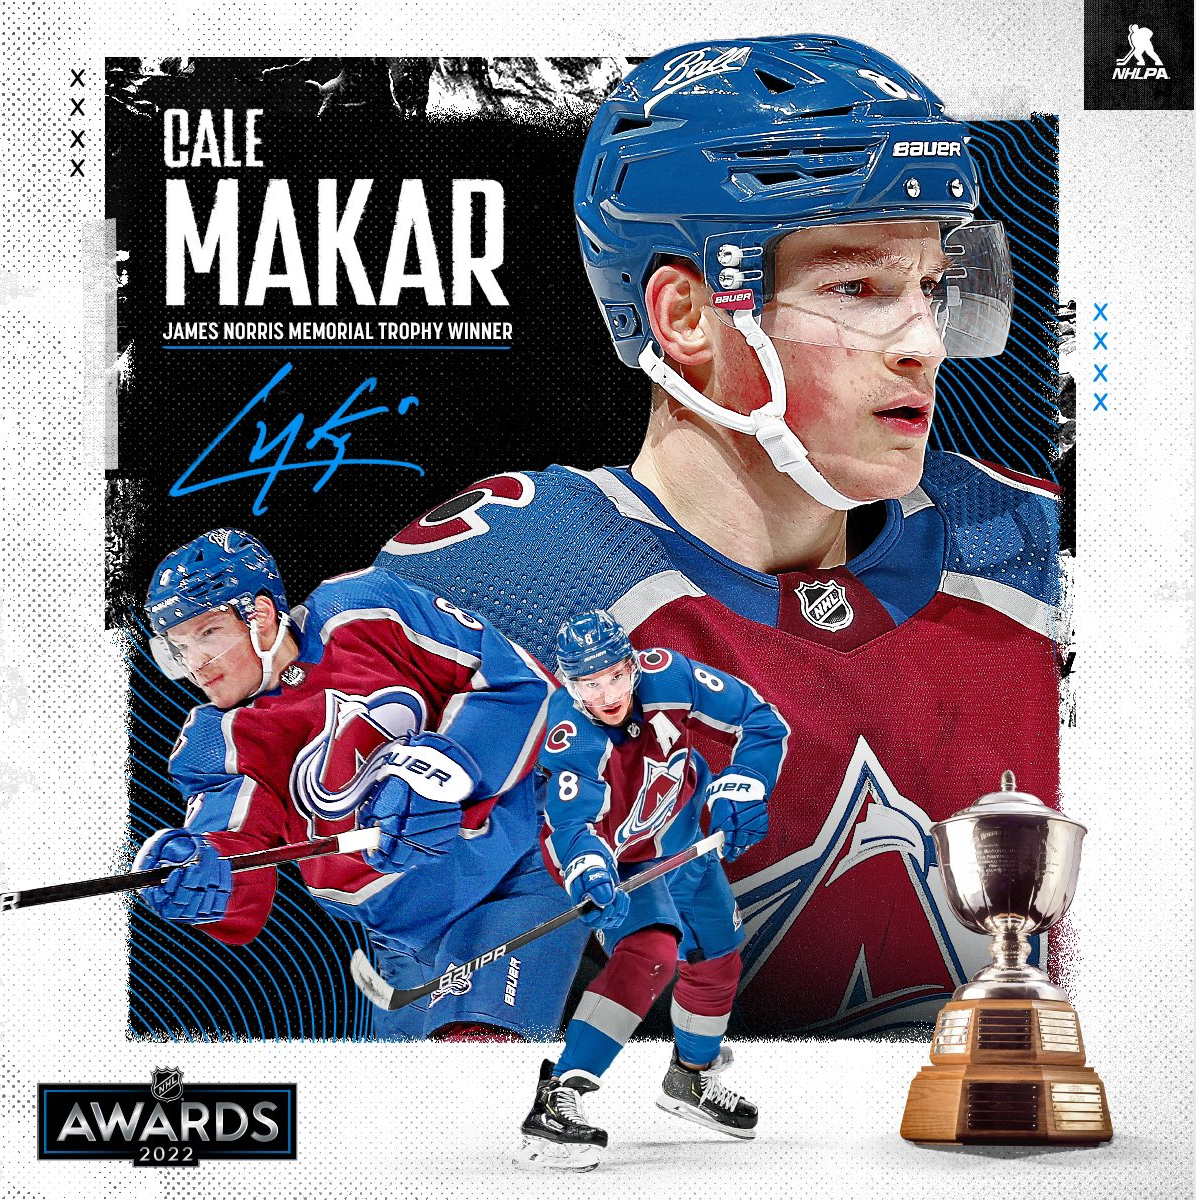 BEST NHL DEFENSEMAN: Colorado Avalanche's Cale Makar wins Norris